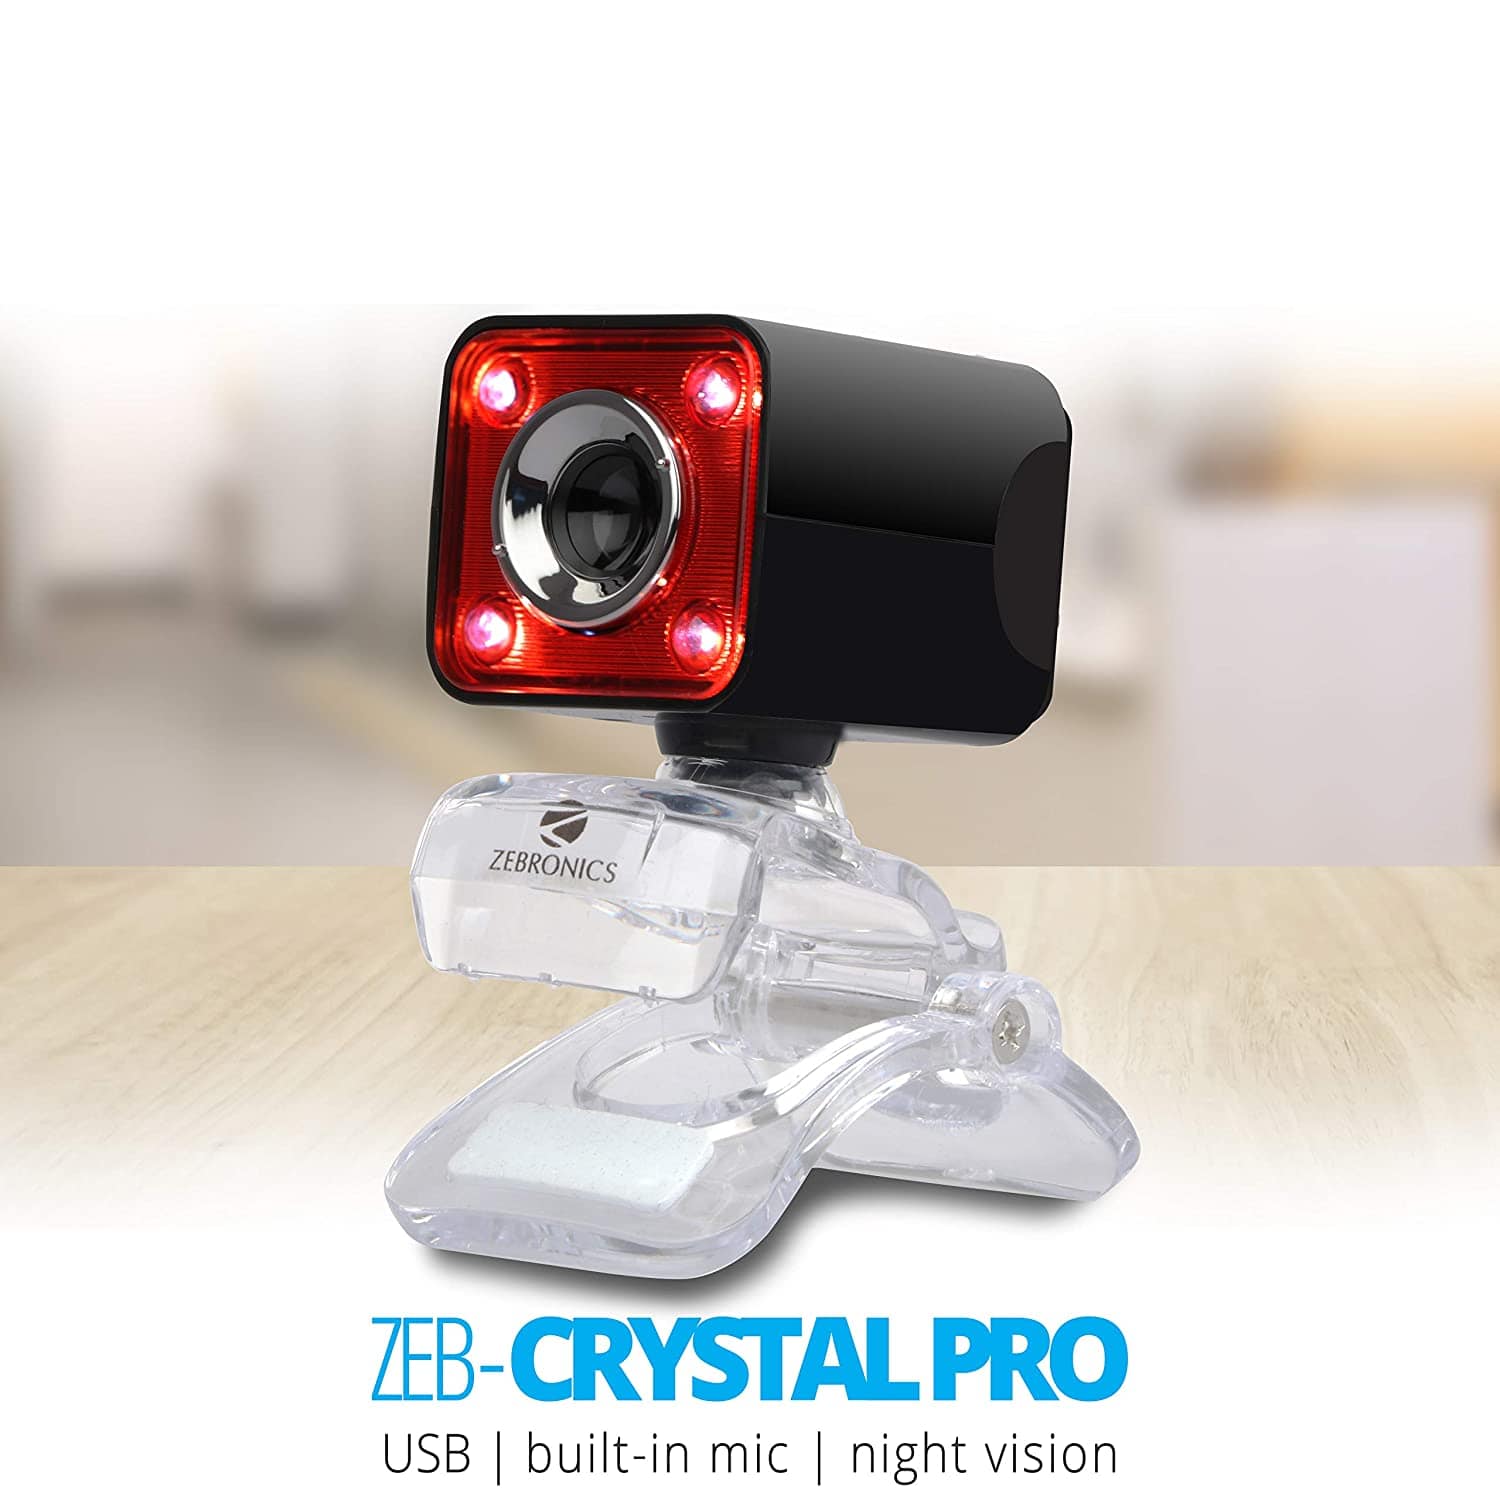 Zebronics Zeb-Crystal Pro Web Camera (RED)-Web Camera-dealsplant